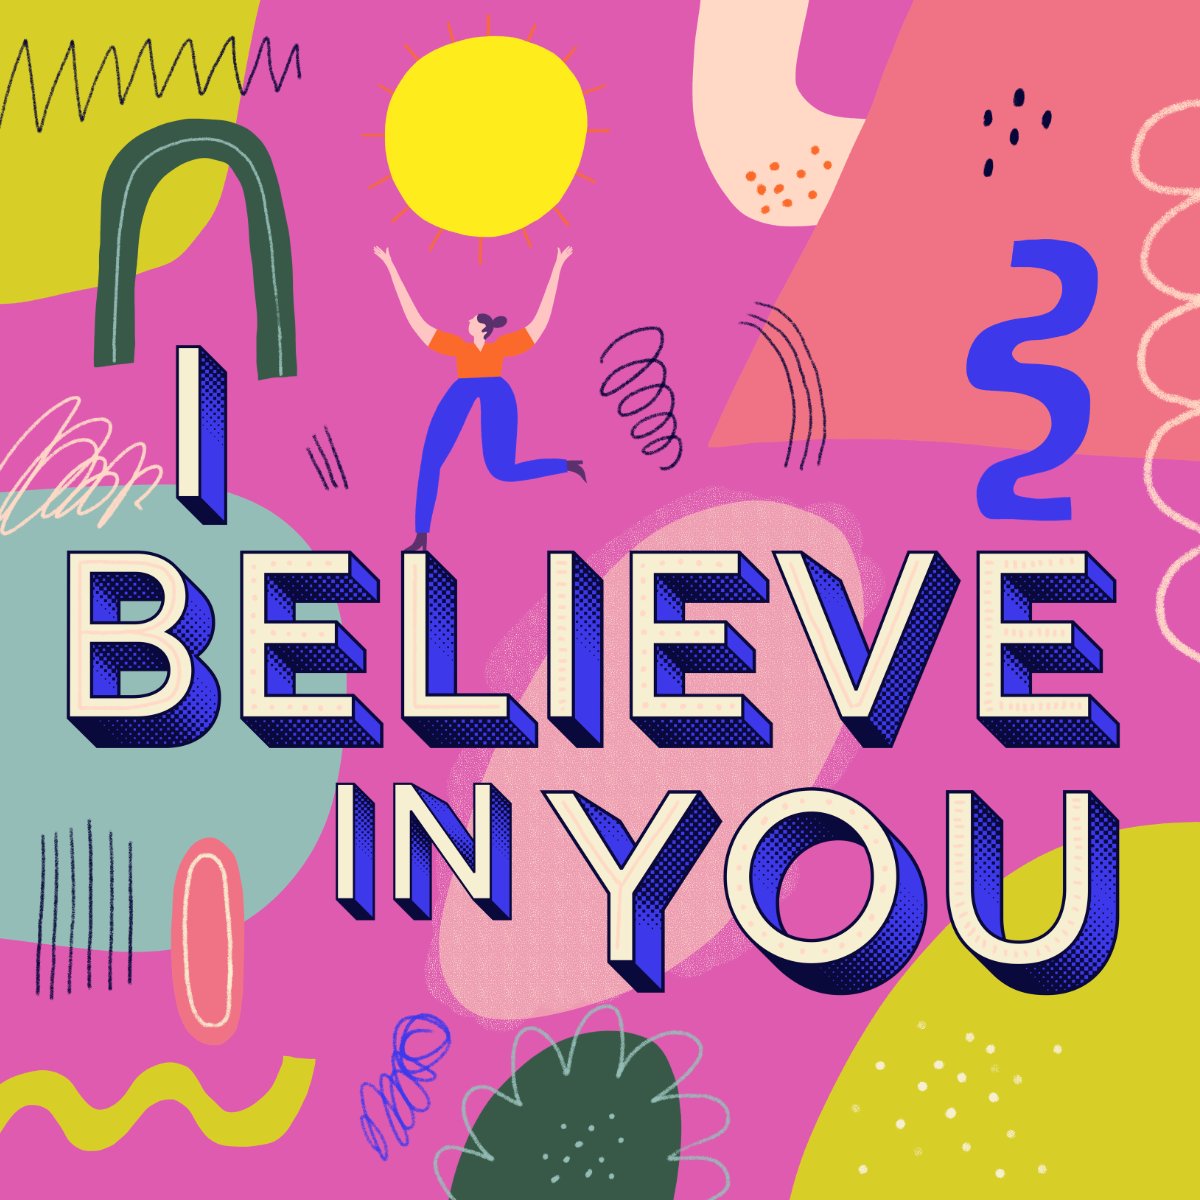 In case you need to hear it - I BELIEVE IN YOU!

#YouMatter #MentalWellBeing #MentalHealth #BelieveInYou